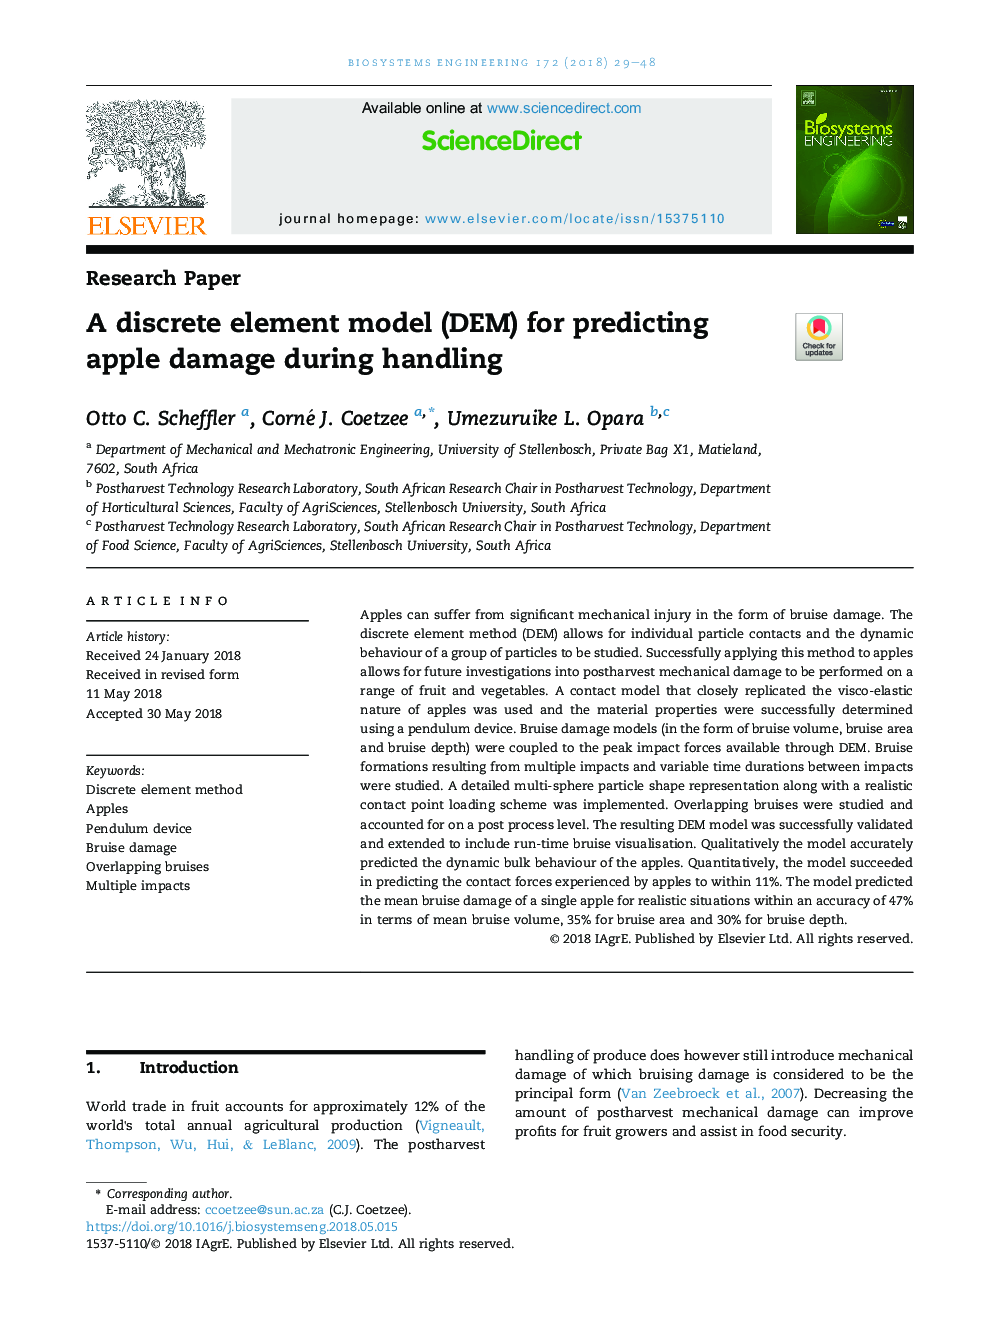 A discrete element model (DEM) for predicting apple damage during handling